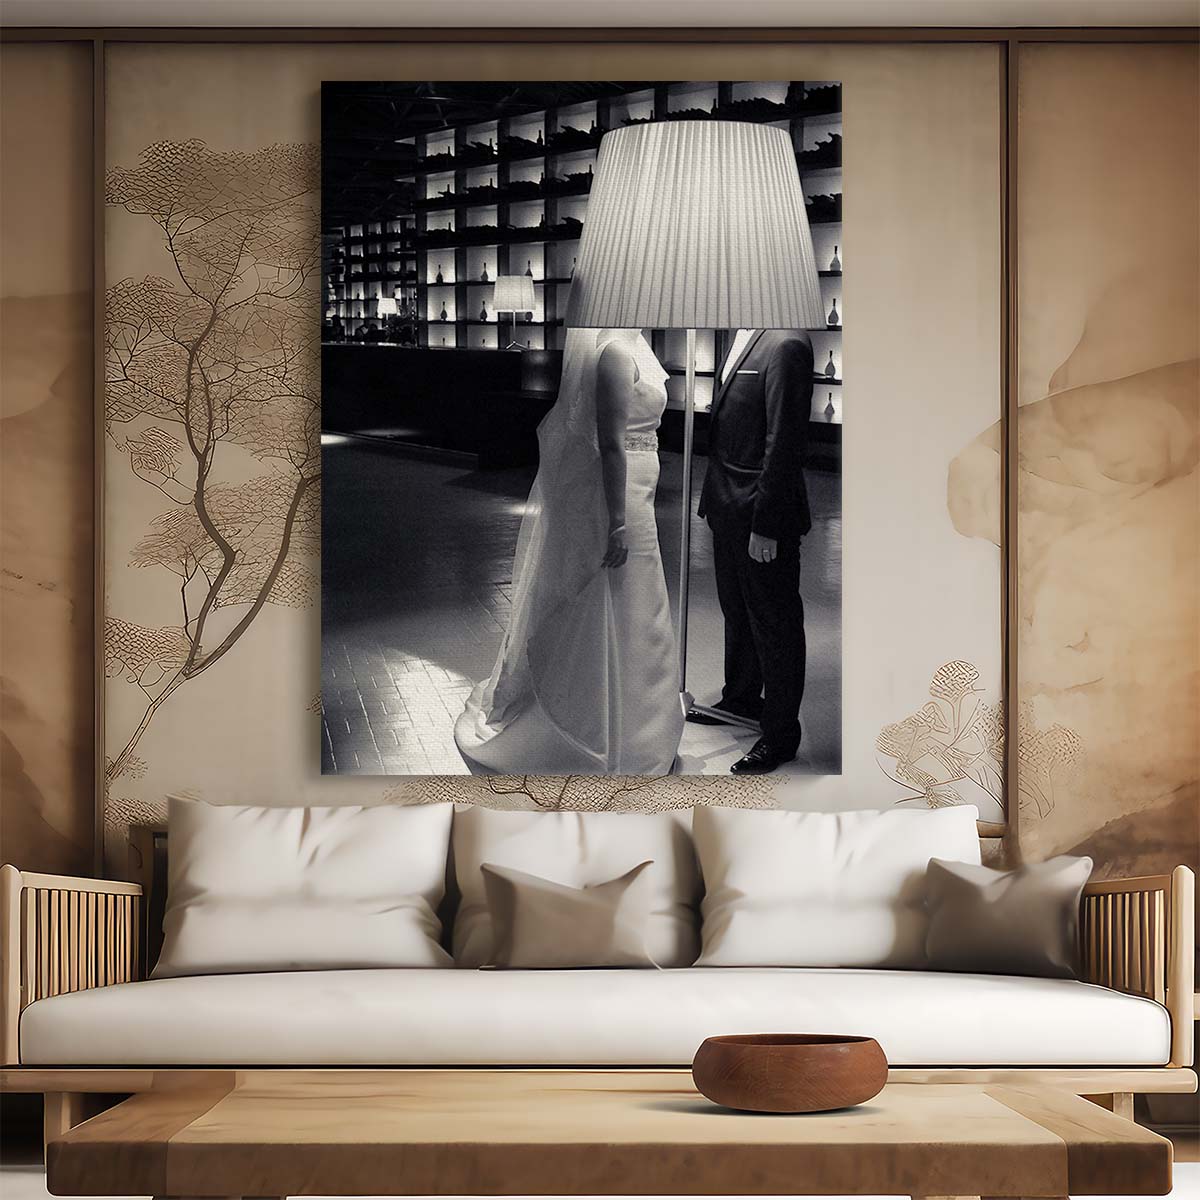 Monochrome Wedding Photography Art Bride & Groom Portrait by Luxuriance Designs, made in USA